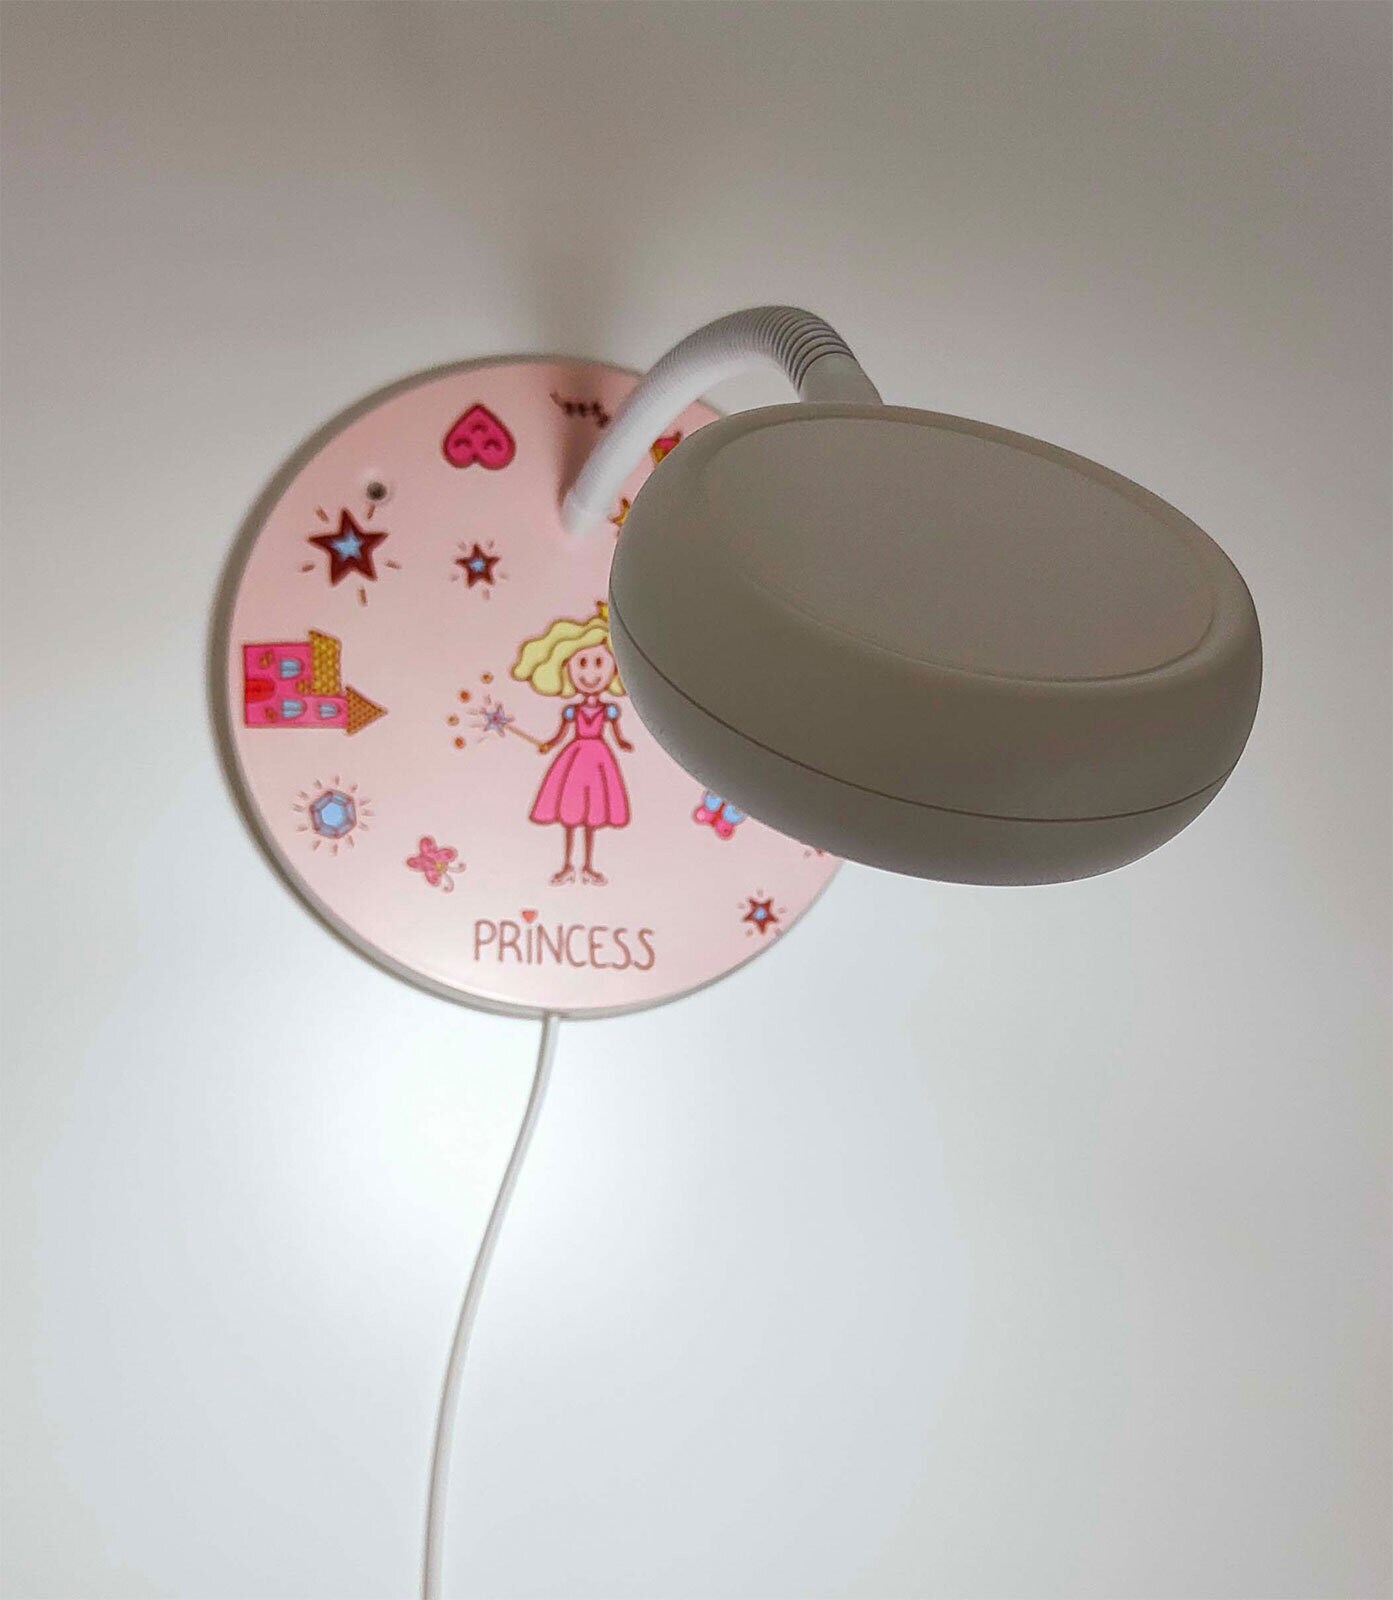 niermann Retrofit Kinderlampe Wand Princess